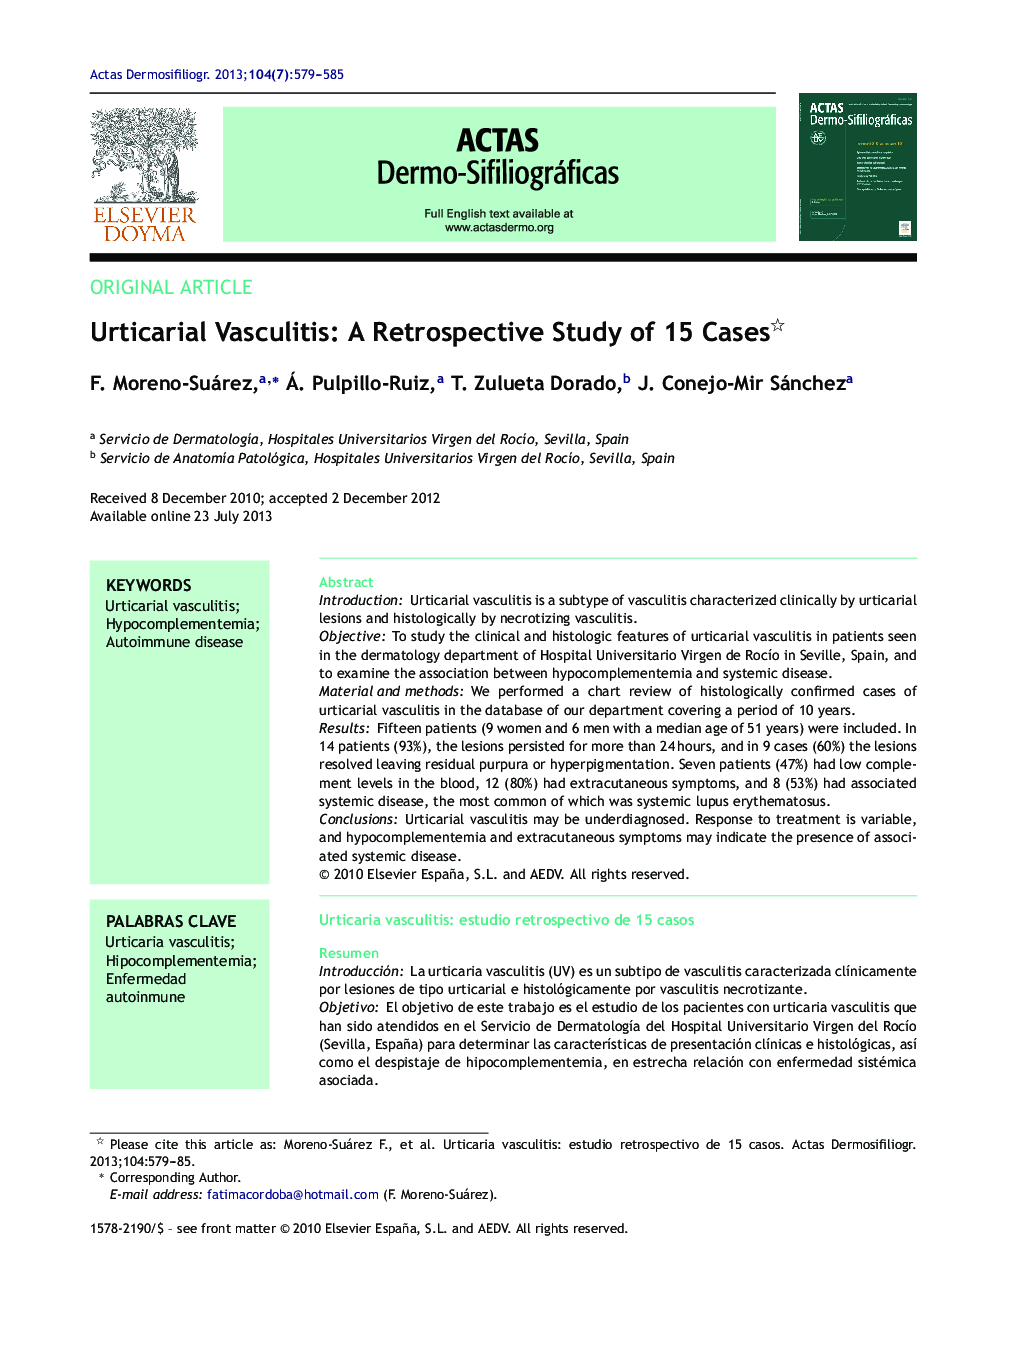 Urticarial Vasculitis: A Retrospective Study of 15 Cases 